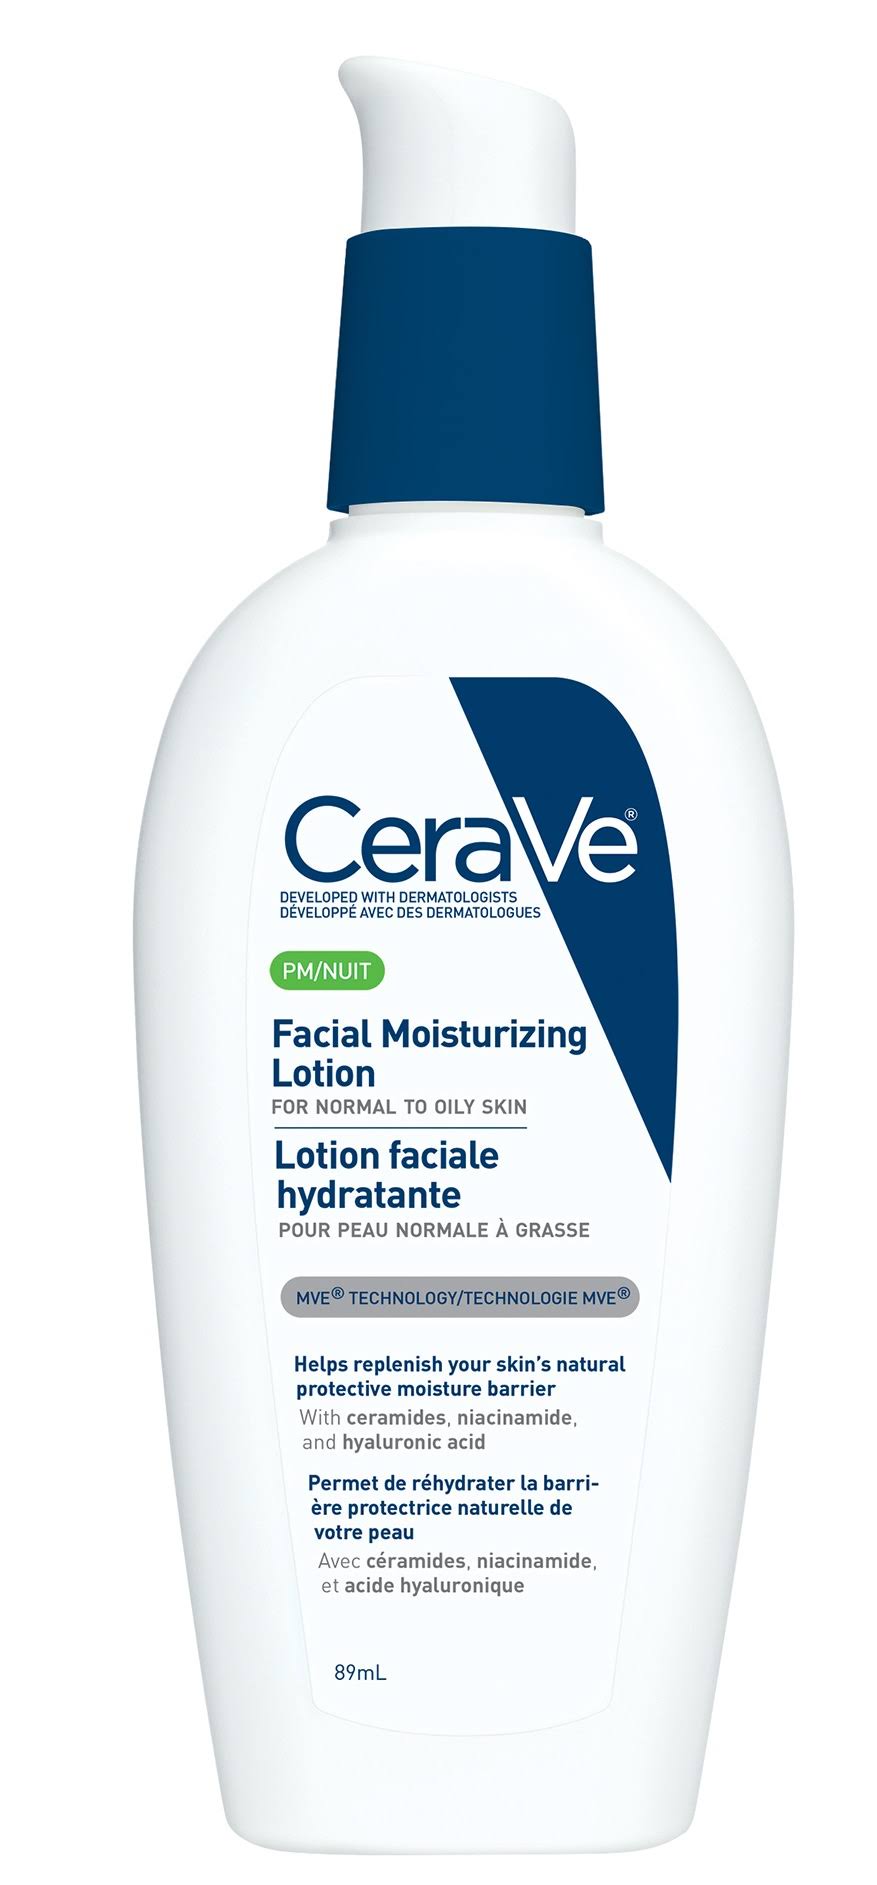 CeraVe Night Lotion Facial Moisturizing - 89 ml